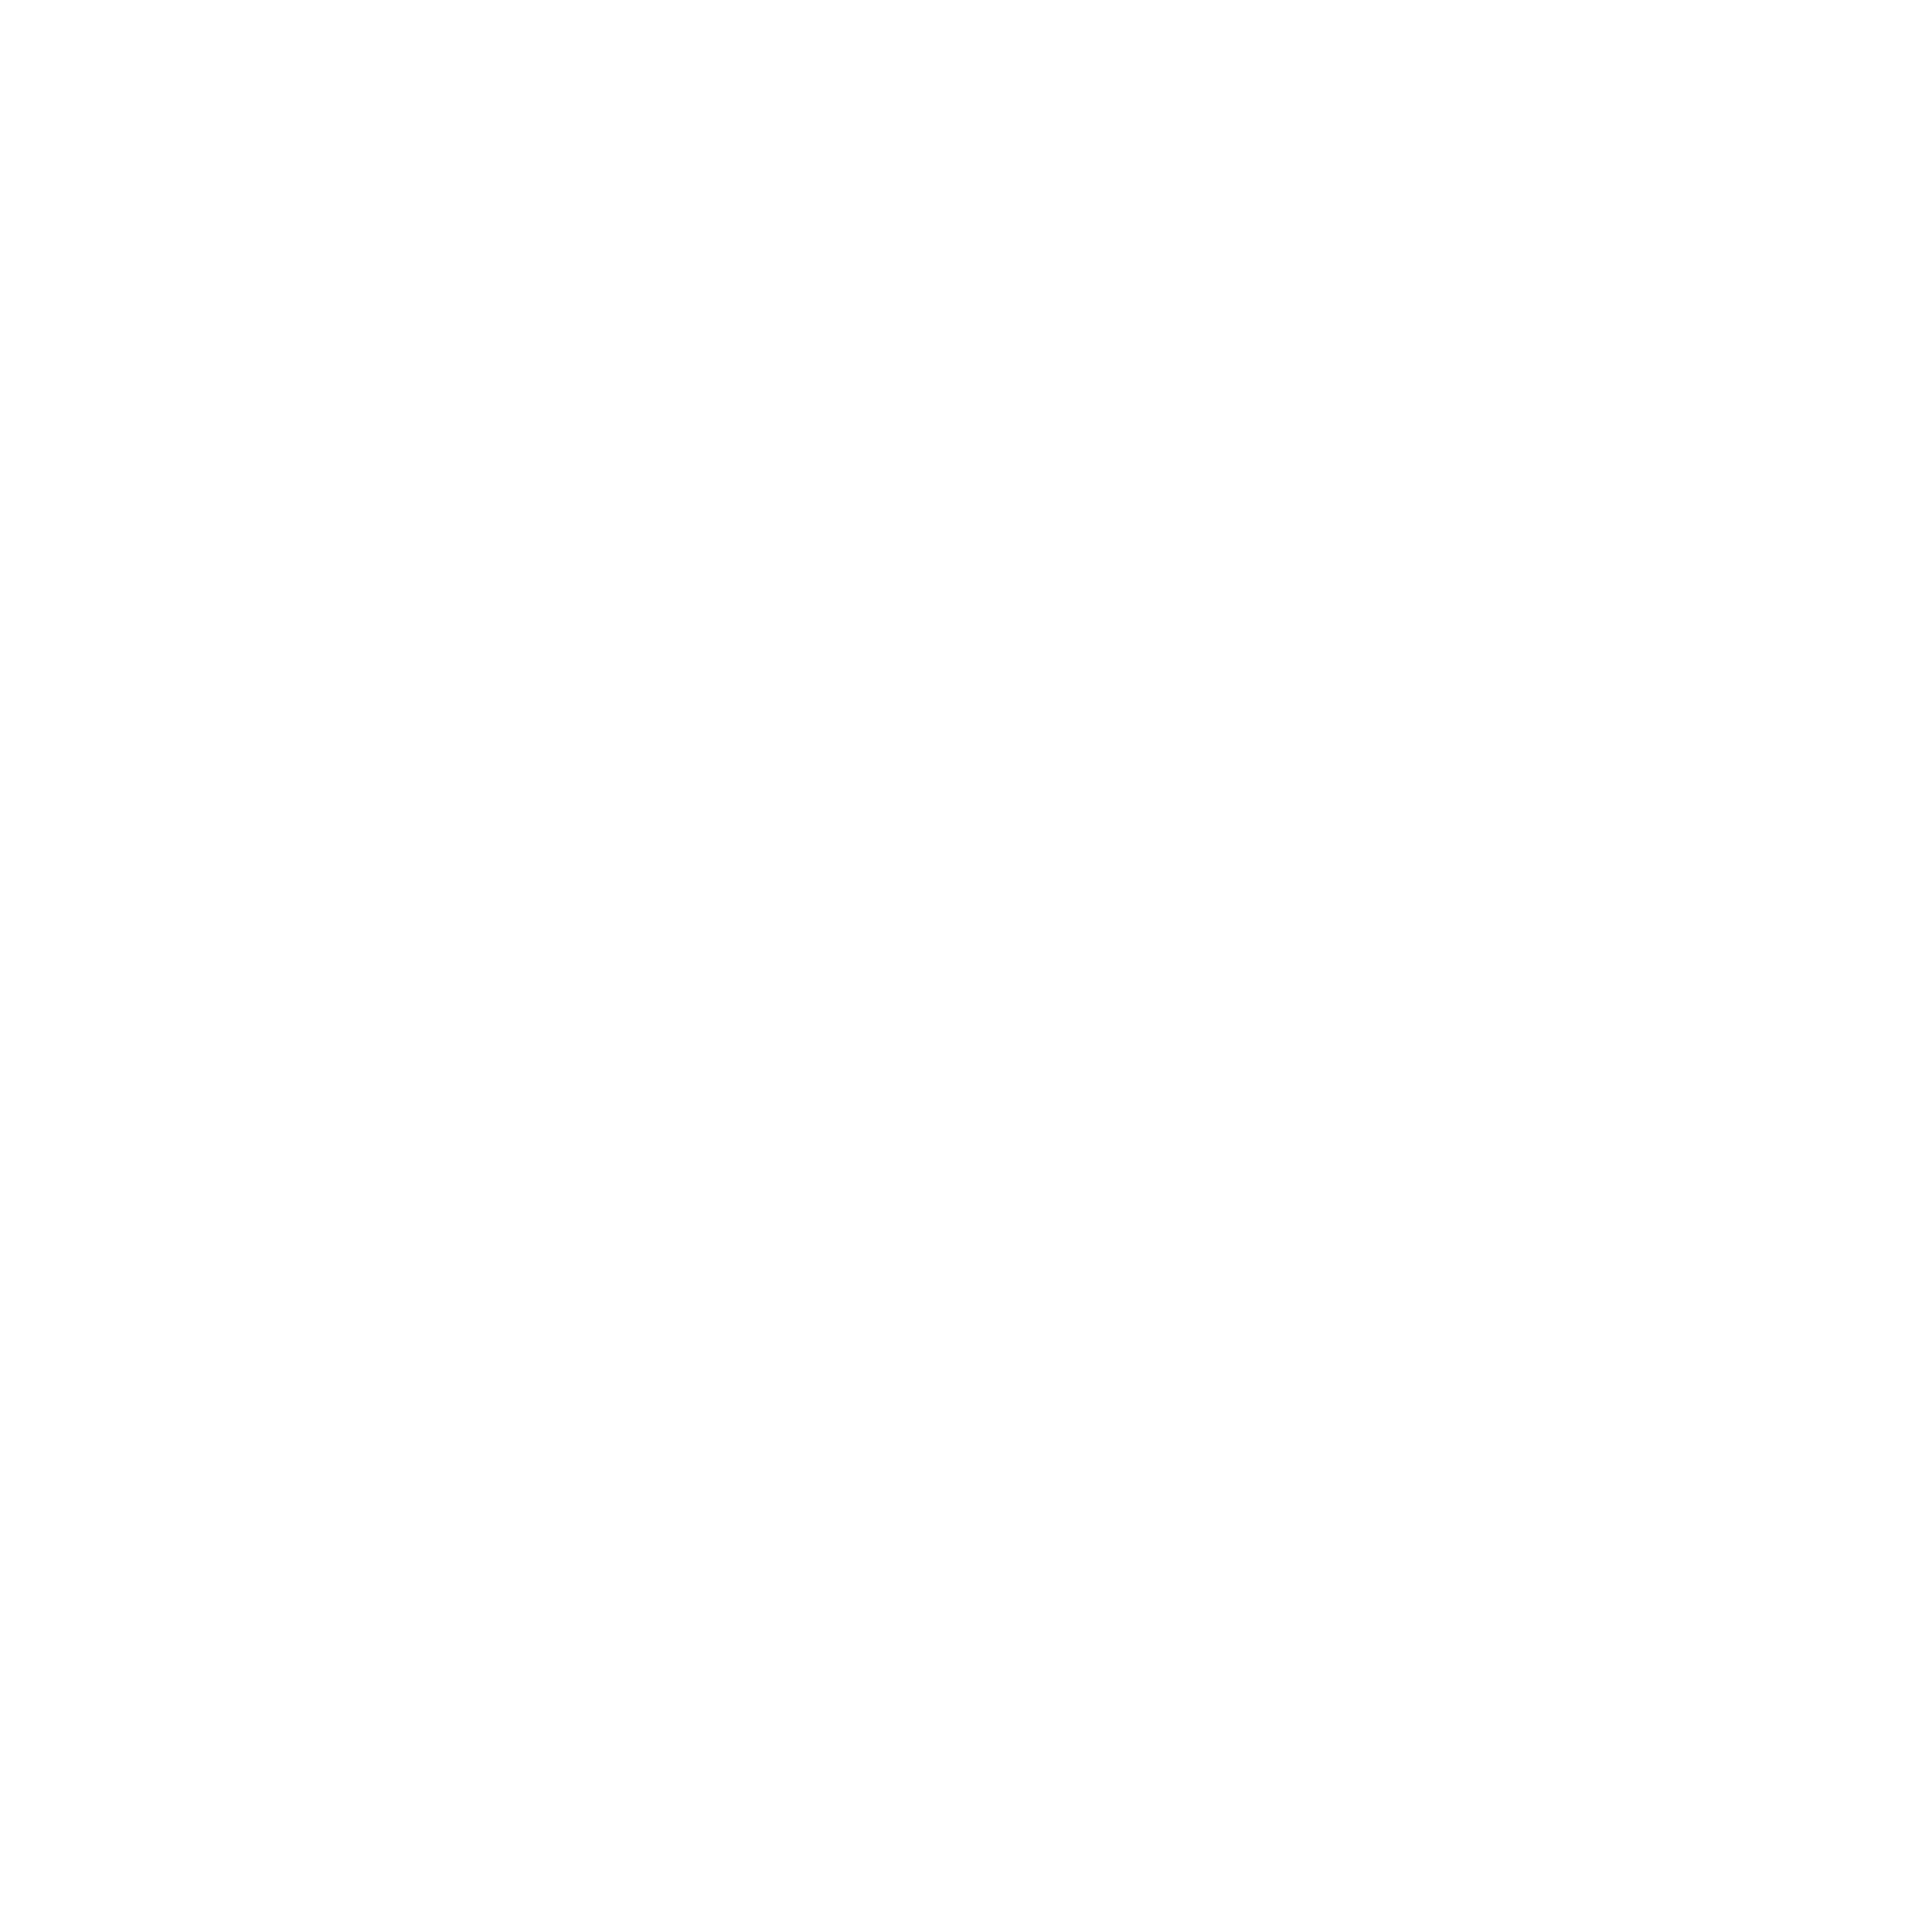 ManpowerGroup Logo